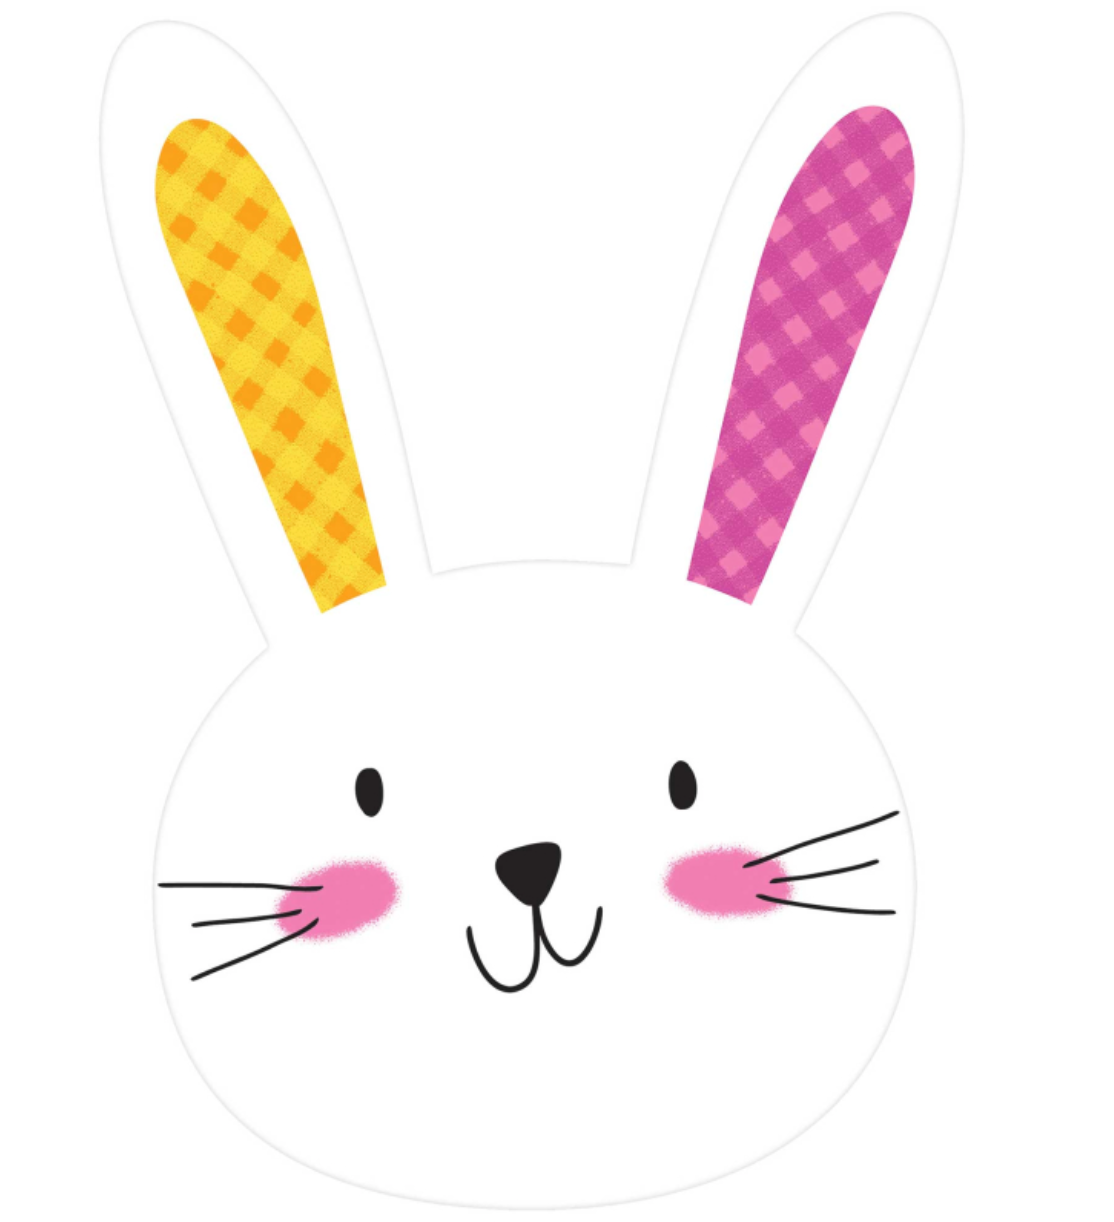 Easter Bunny Cutout